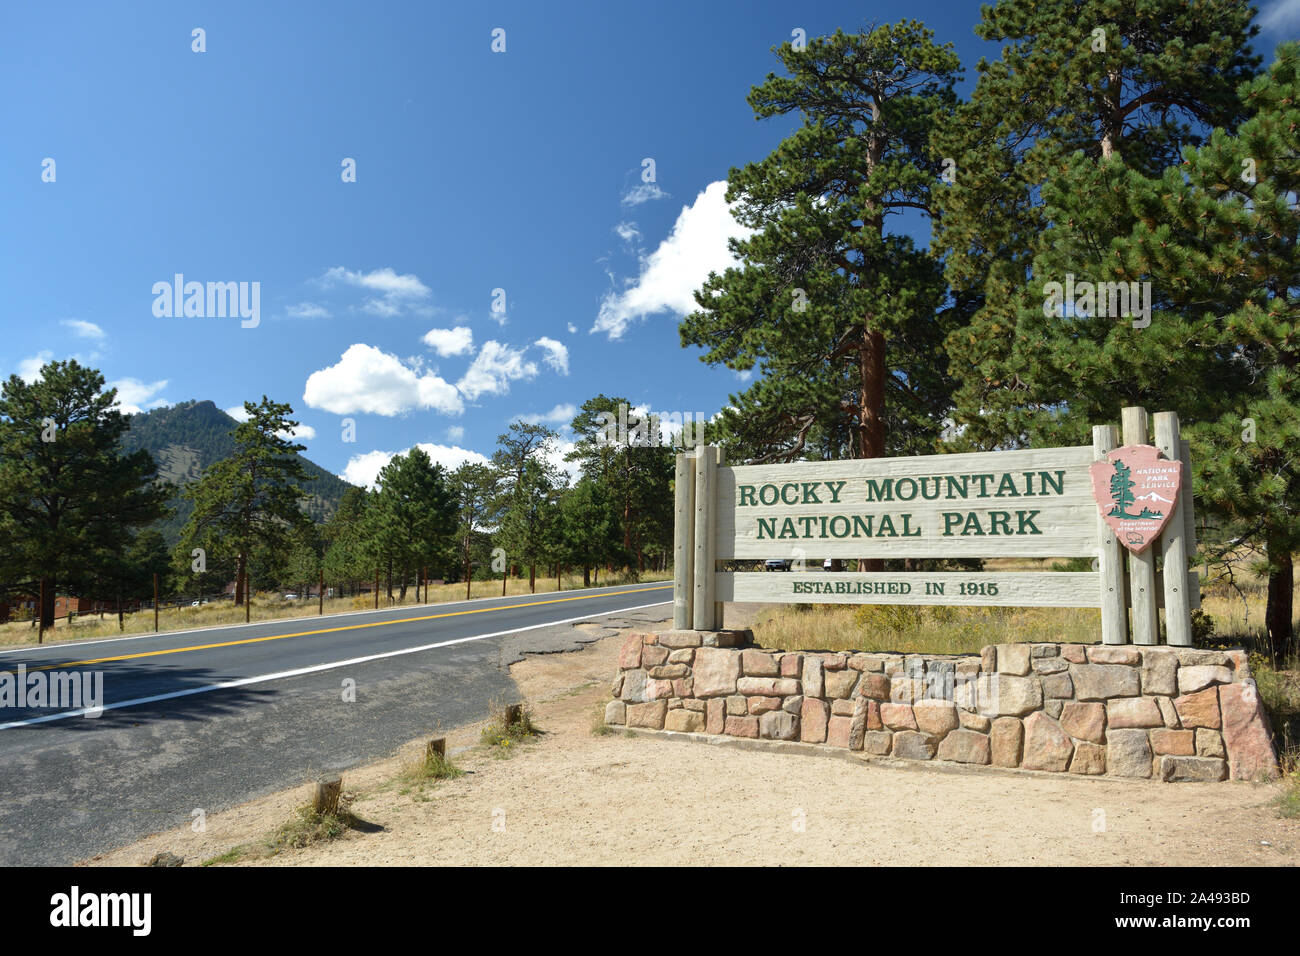 ESTES PARK, CO, USA - September 28, 2019: The entrance to Rocky Mountain National Park on a sunny day. Stock Photo